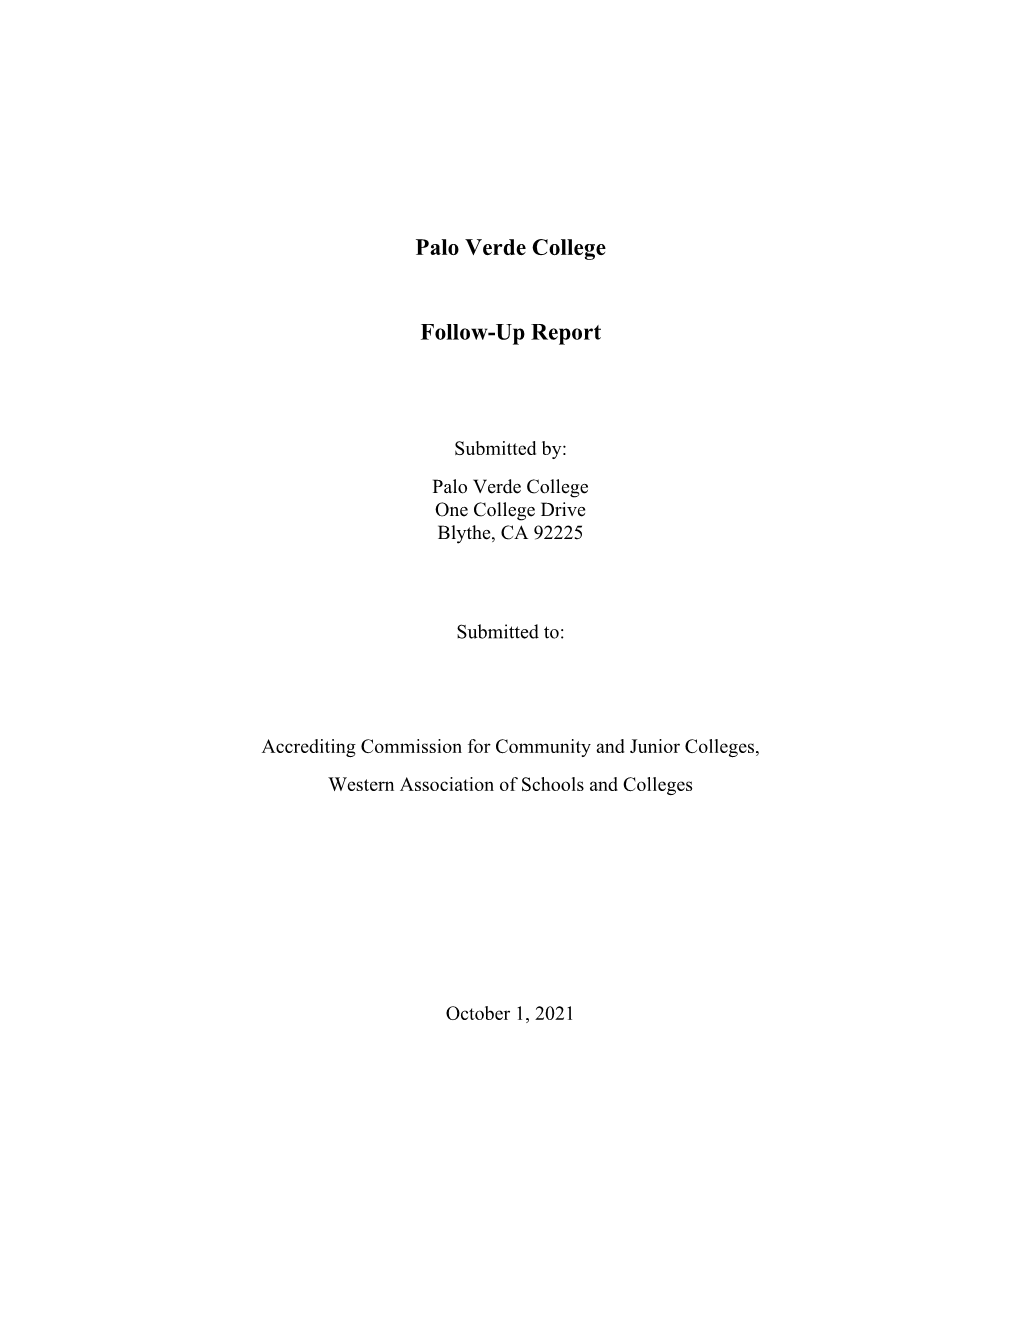 Palo Verde College Follow-Up Report